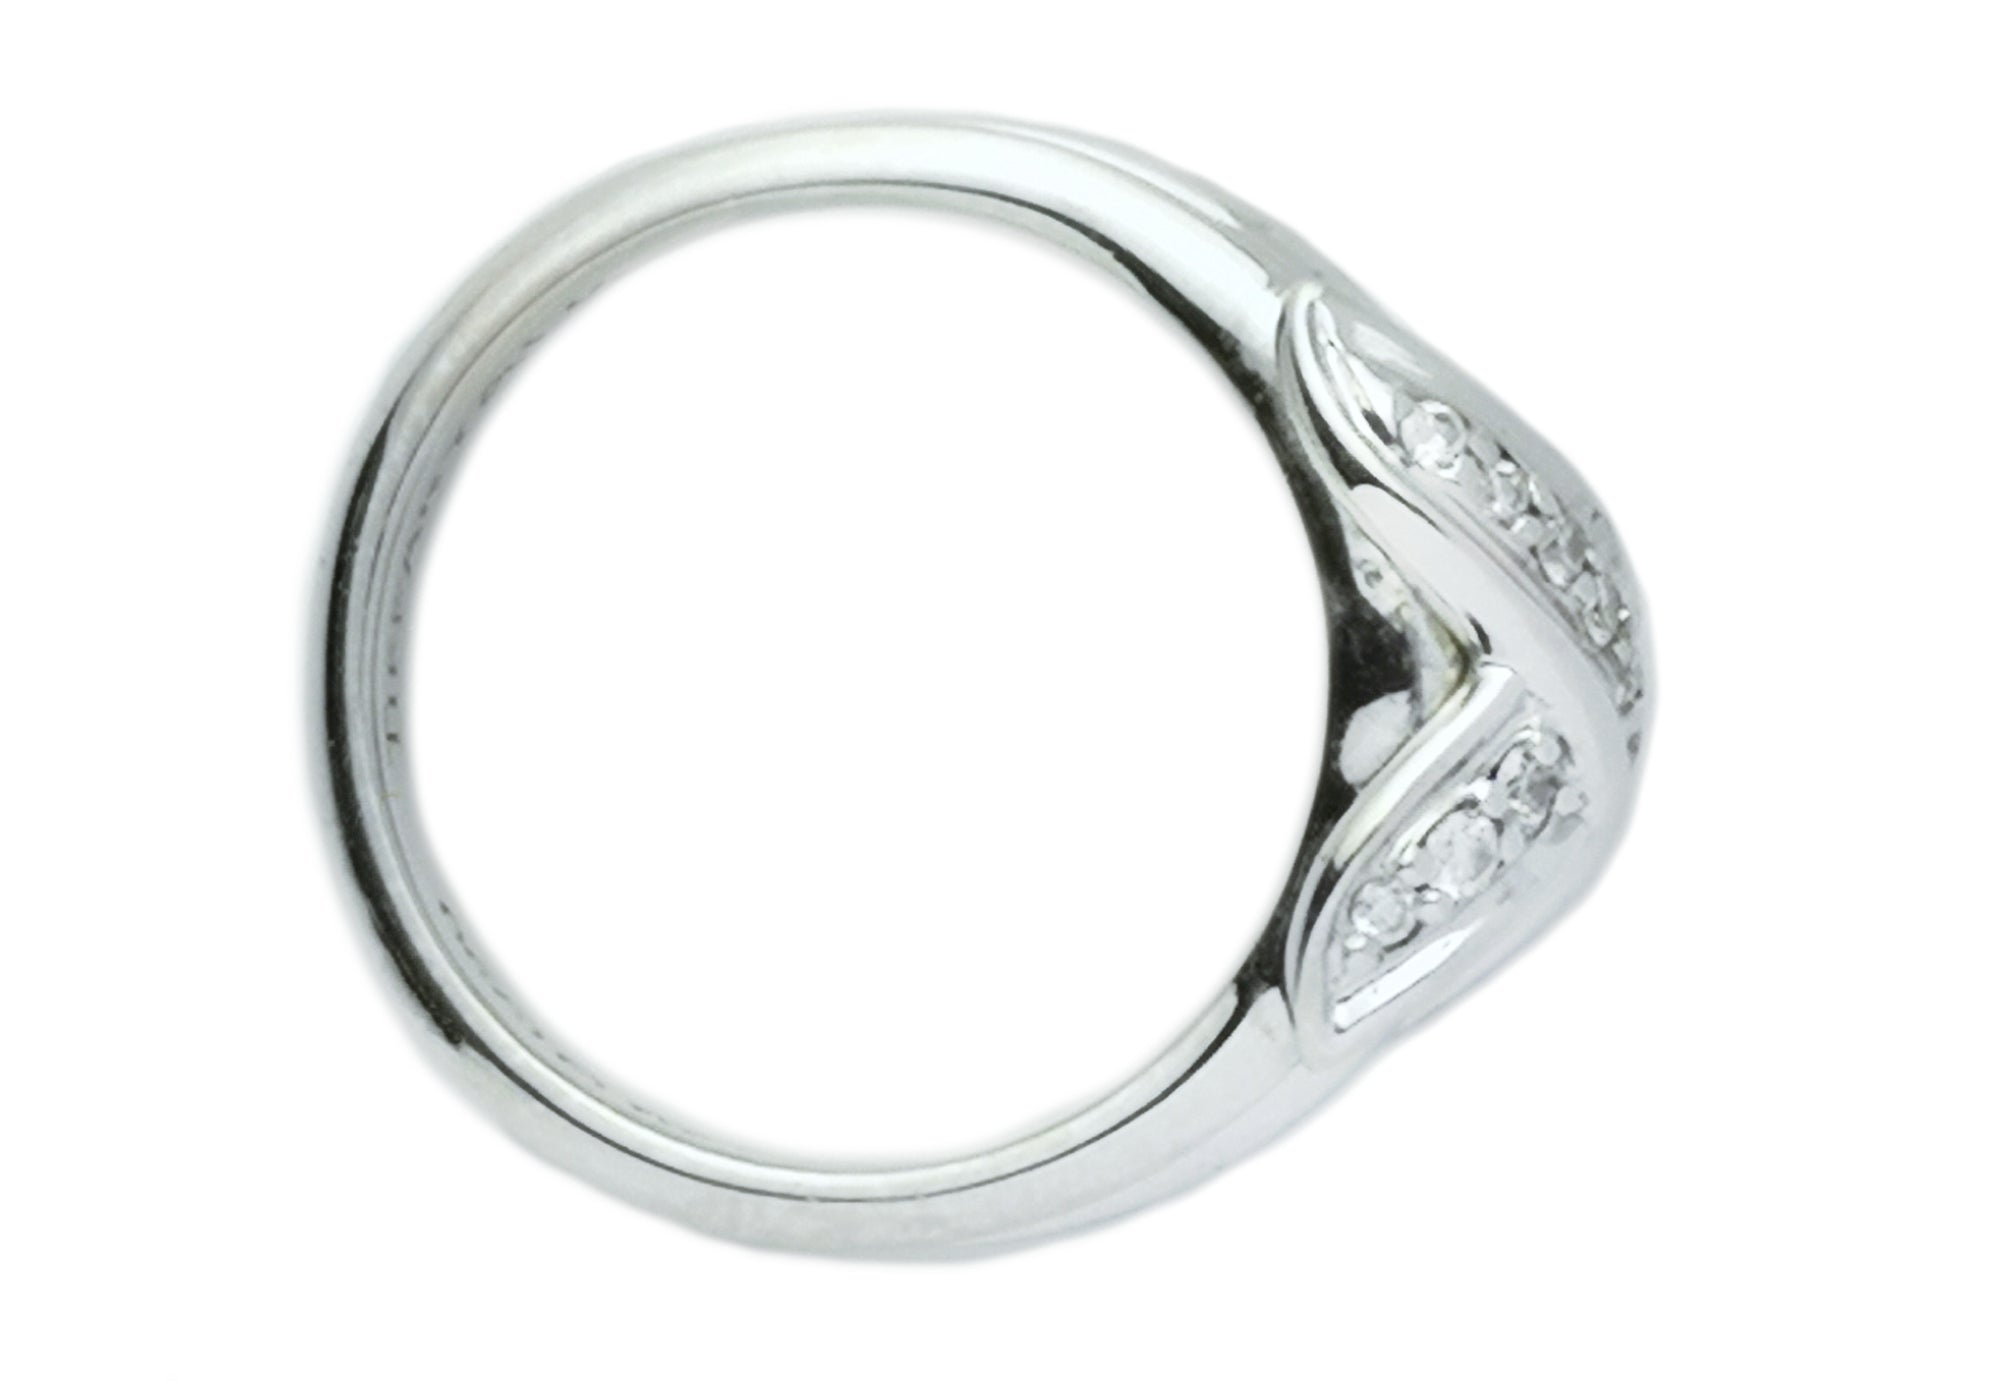 Tiffany & Co. 1990 Signature X Diamond Ring in 18K White Gold